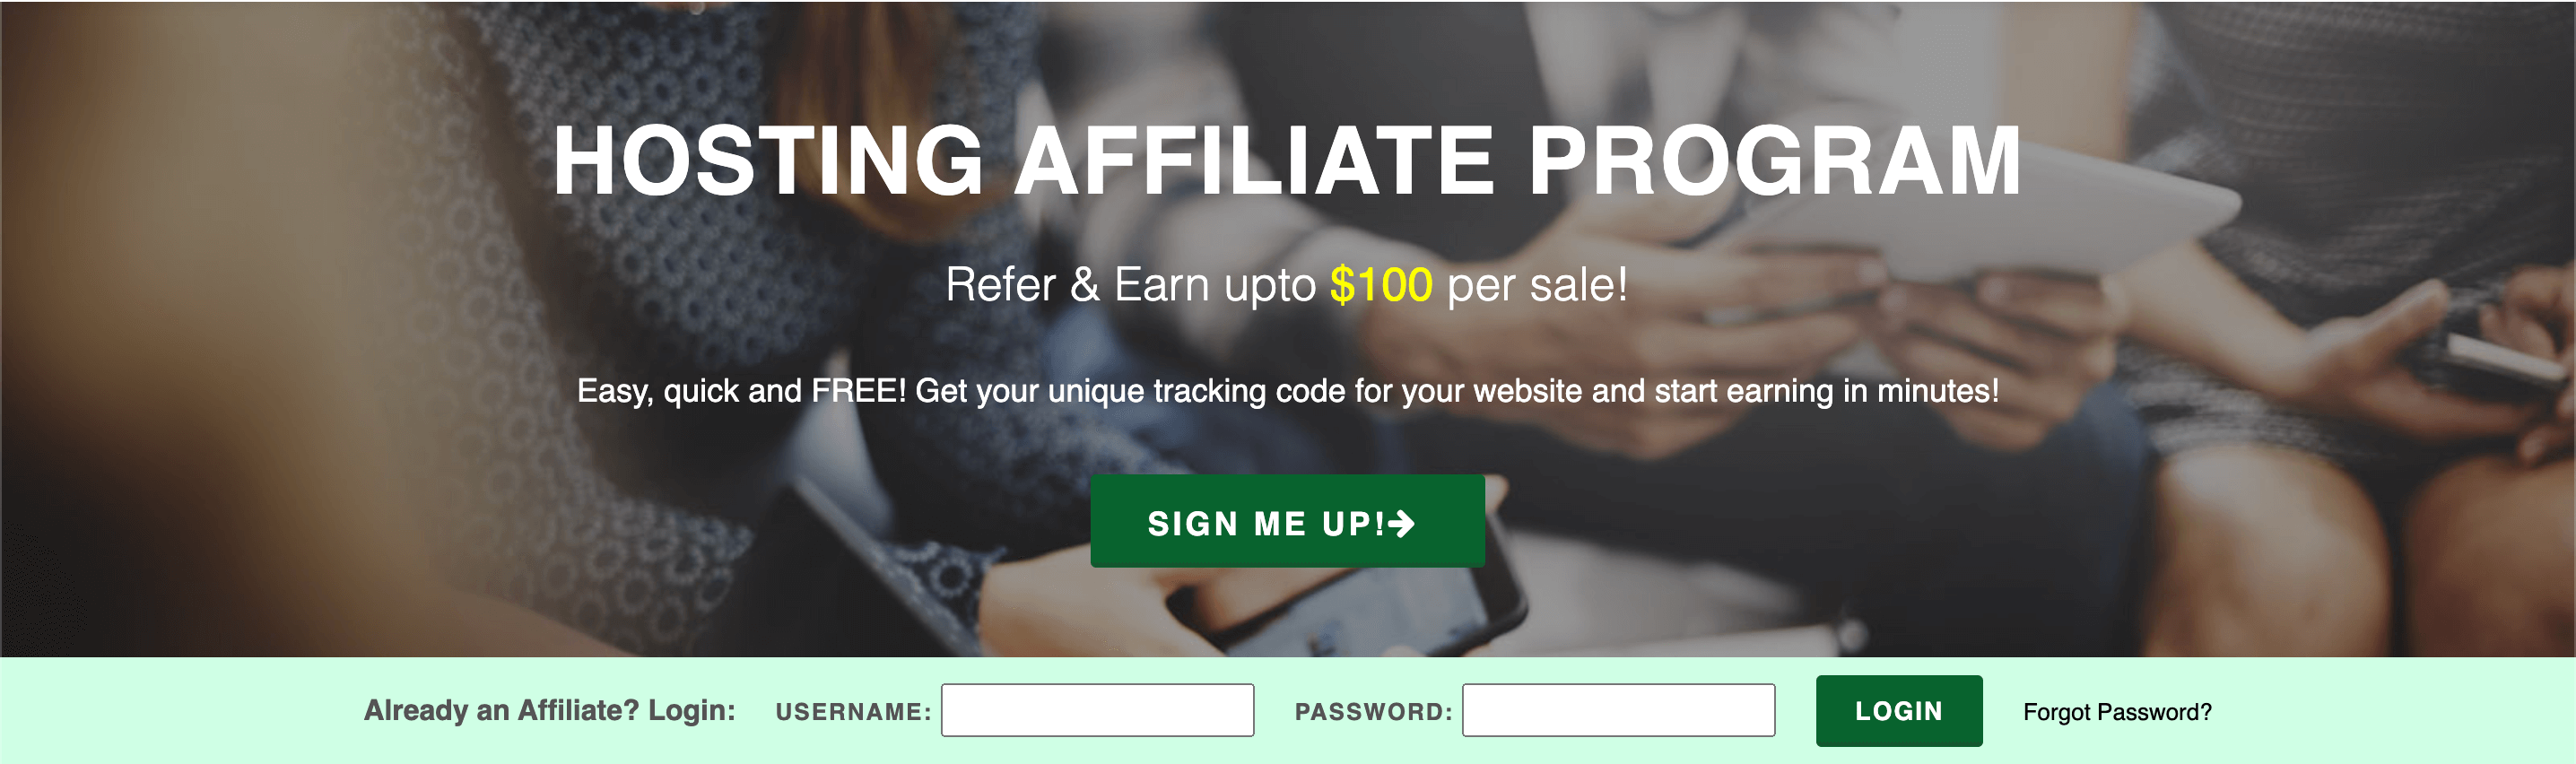 GreenGeeks' affiliate program homepage